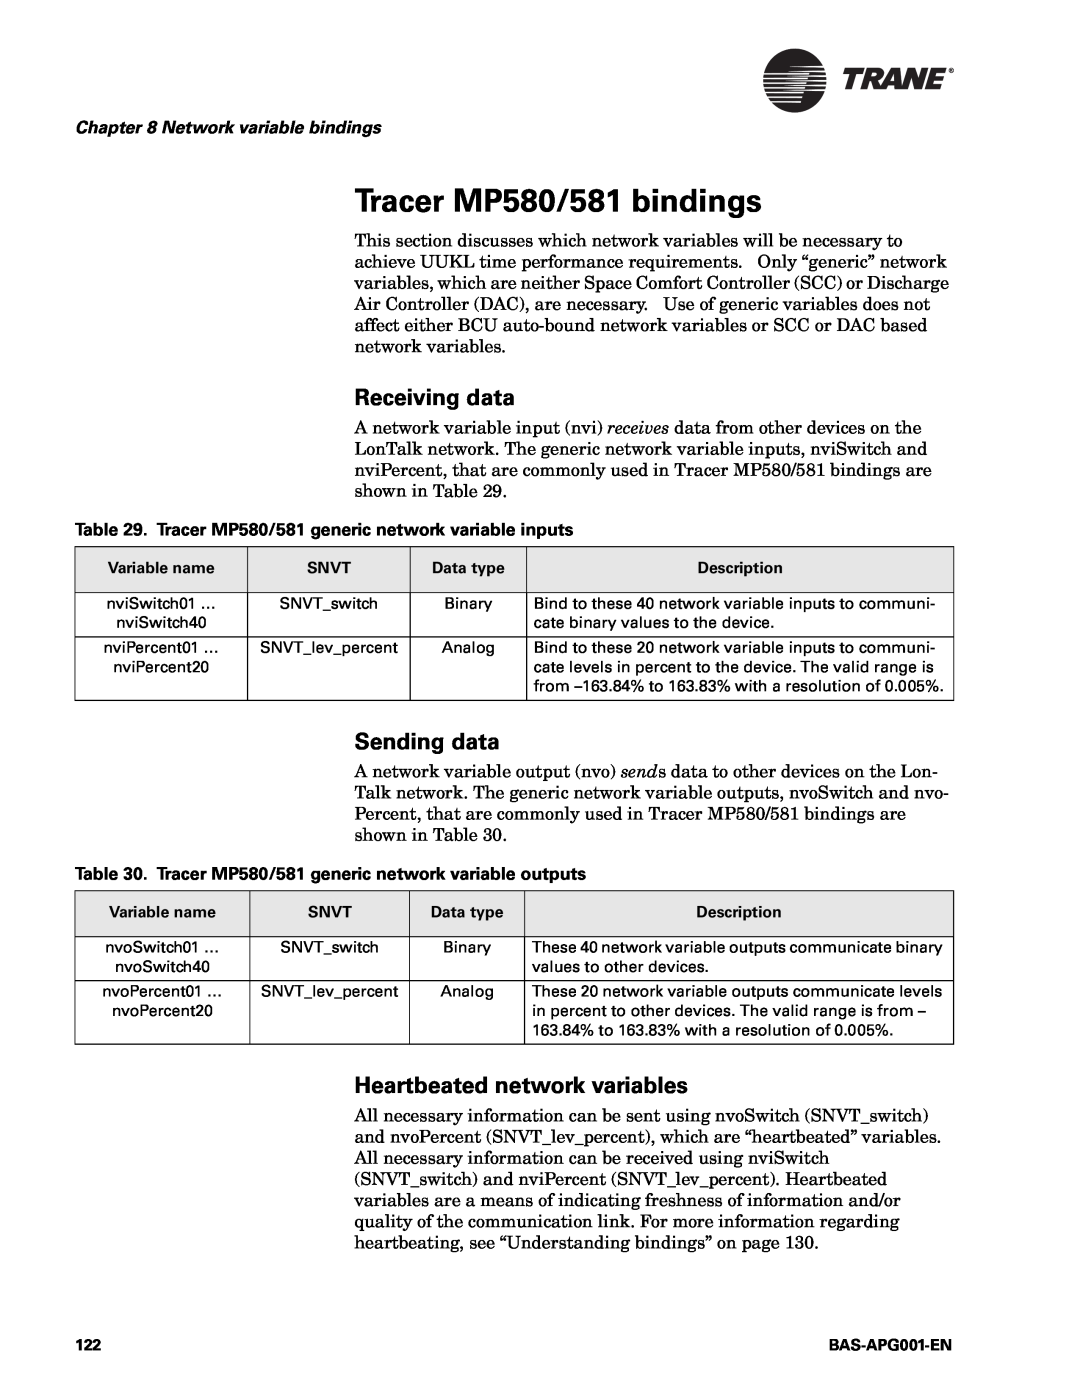 Trane BAS-APG001-EN manual Tracer MP580/581 bindings, Receiving data, Sending data, Heartbeated network variables 